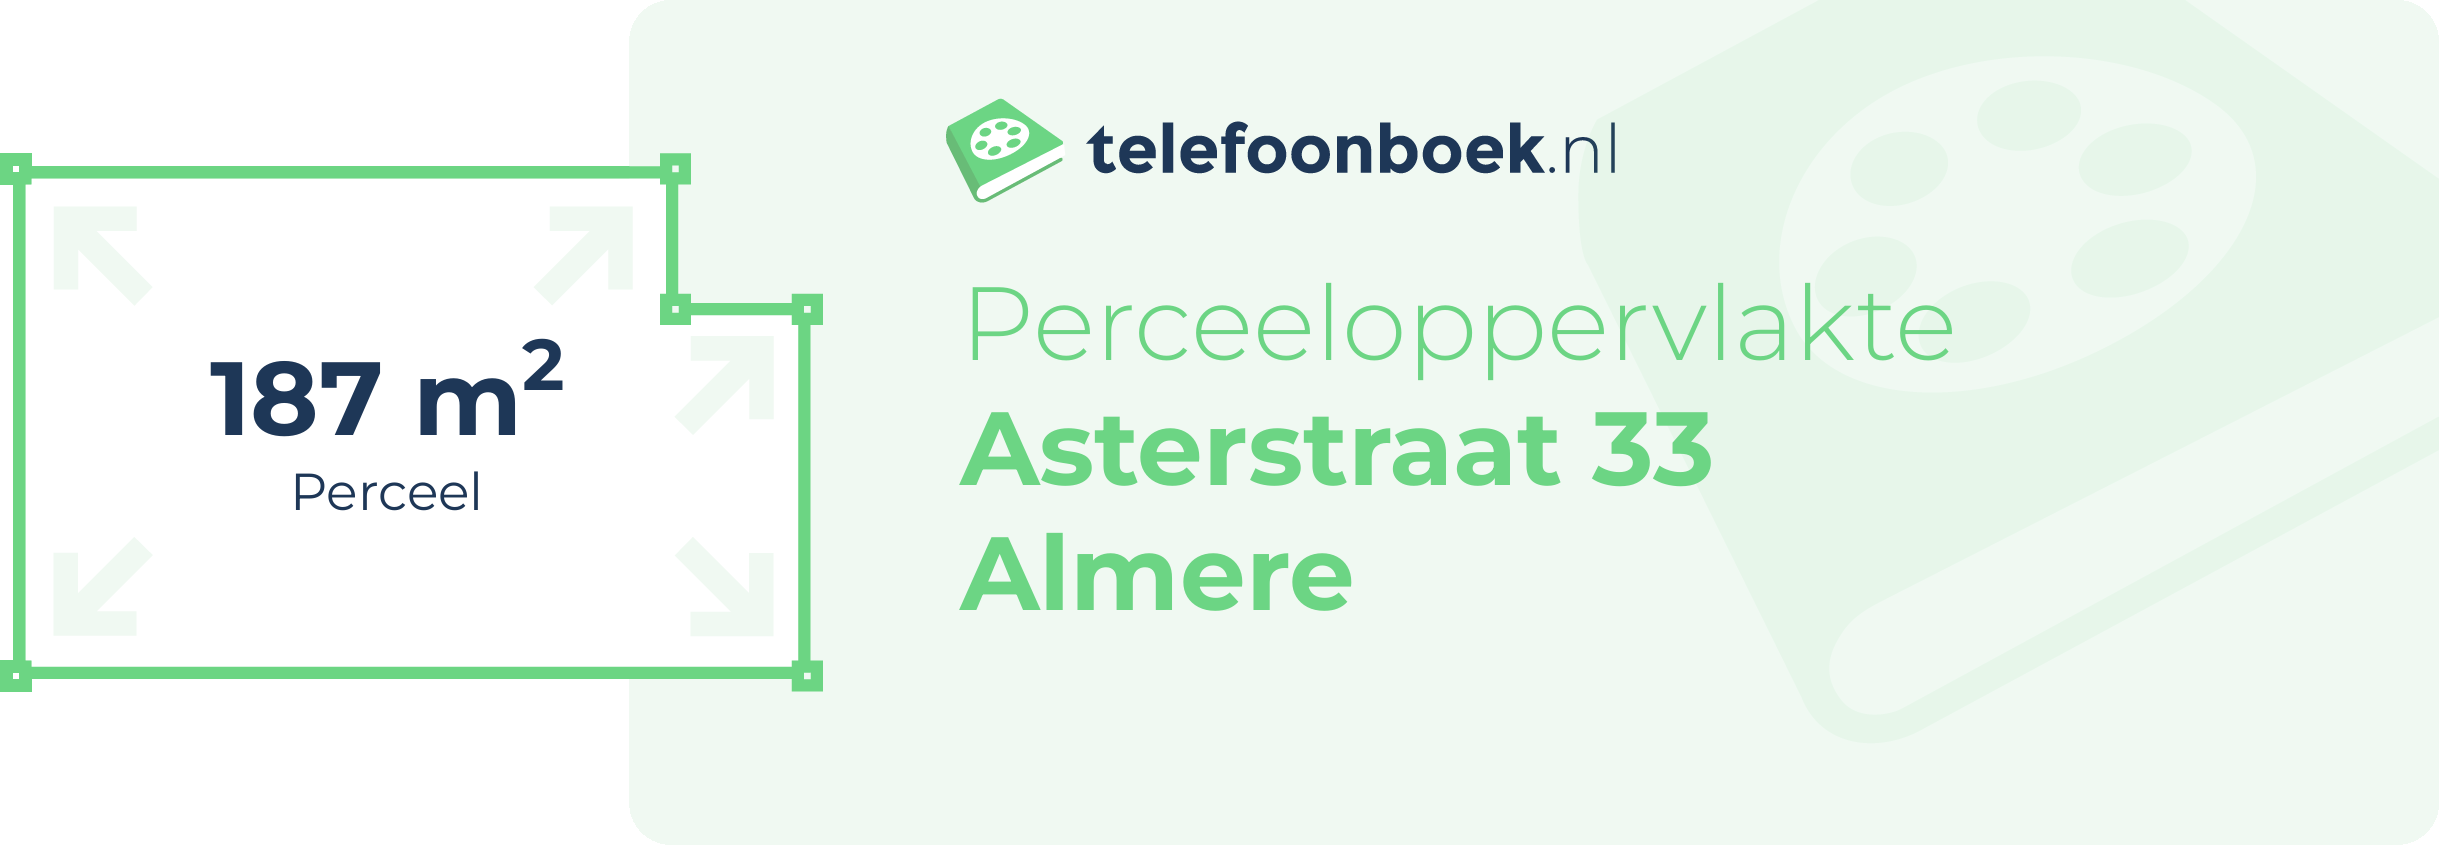 Perceeloppervlakte Asterstraat 33 Almere